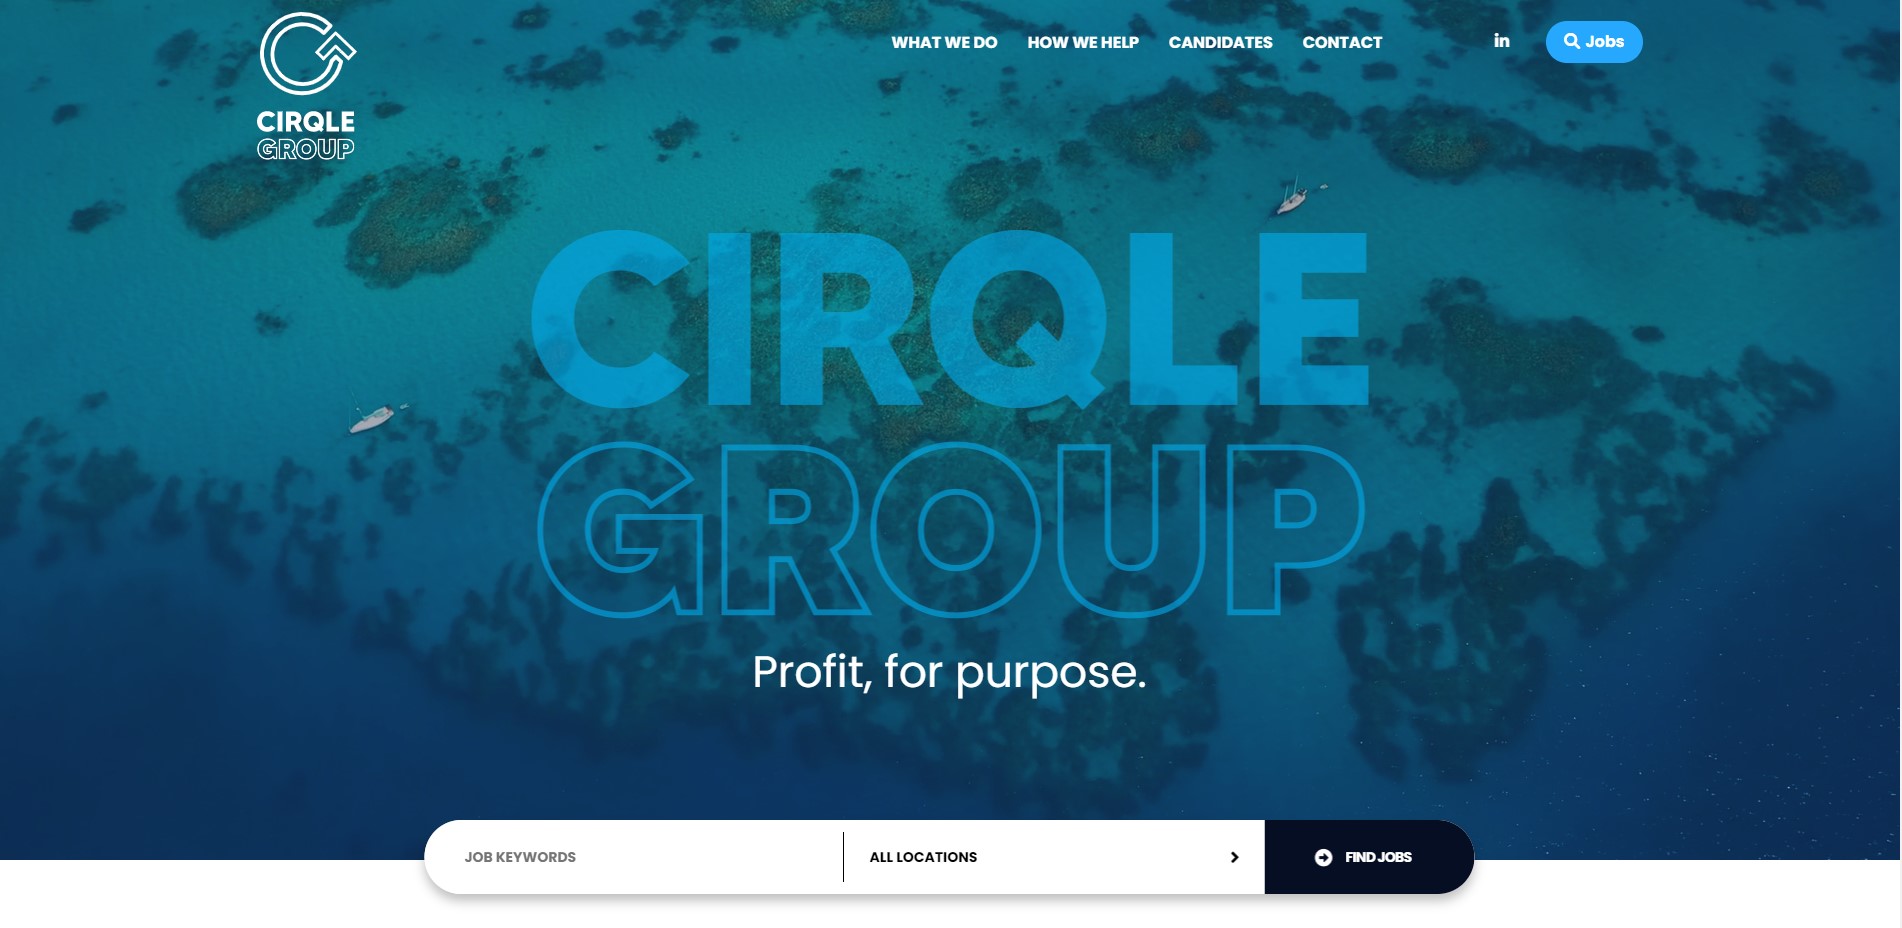 Cirqle Group  Image